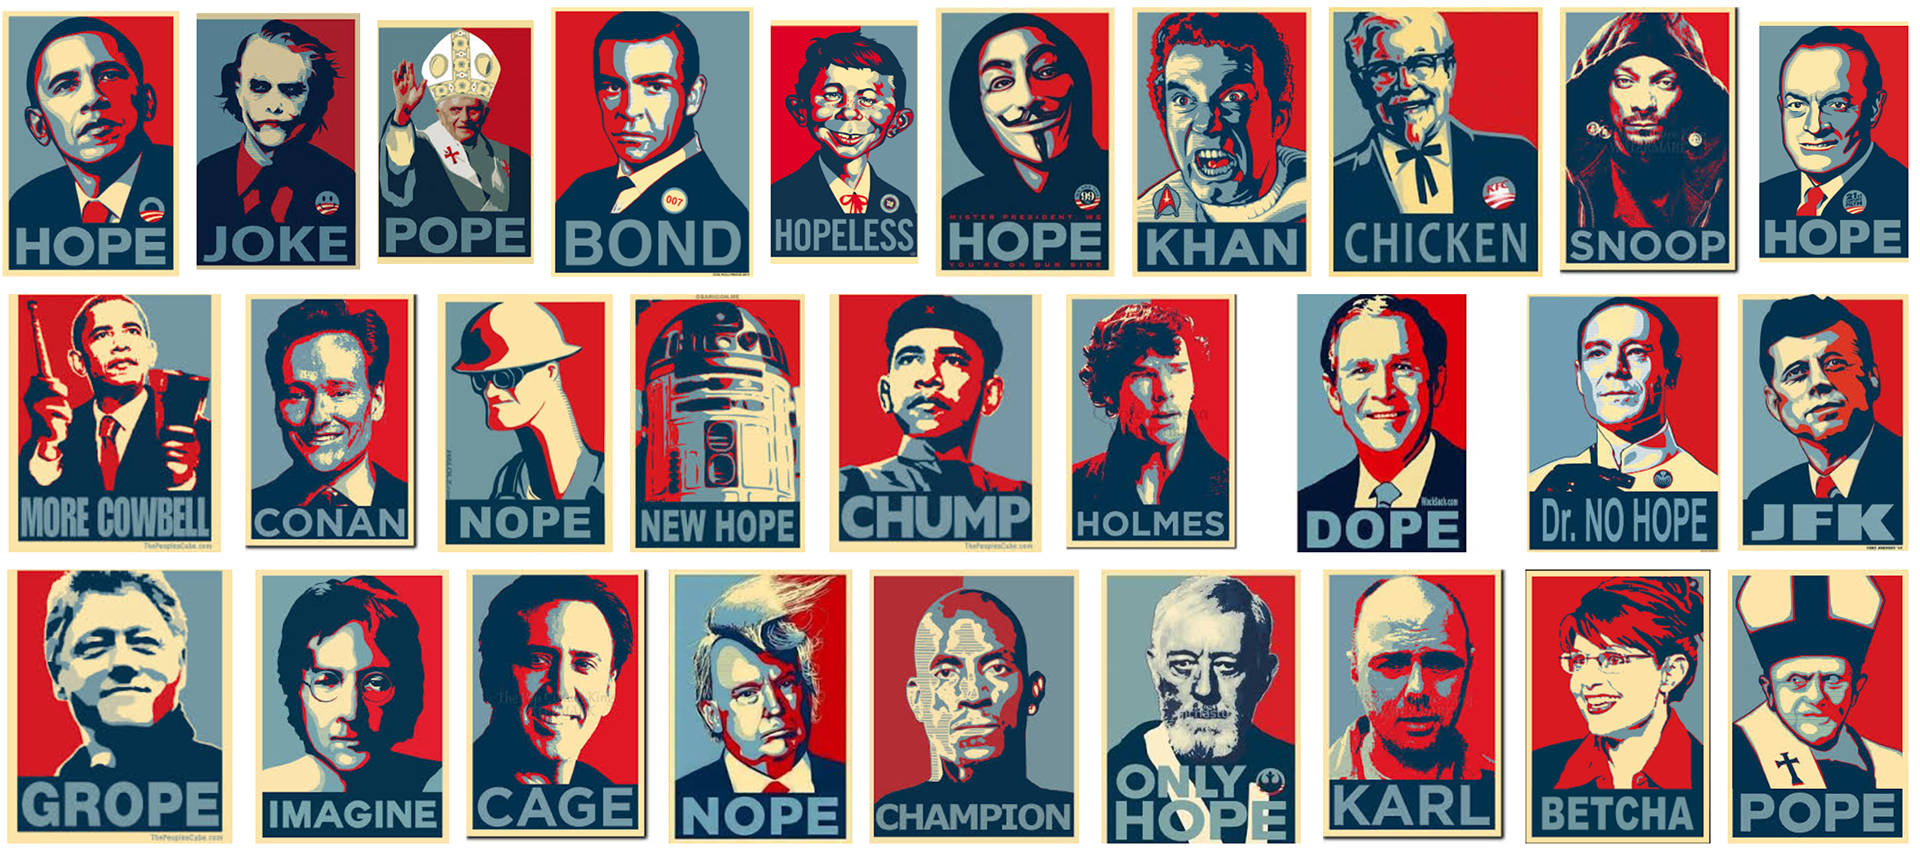 Шепард Фейри Обама. Плакат hope. Плакаты в стиле hope. Плакат в стиле hope Обама. New time hope